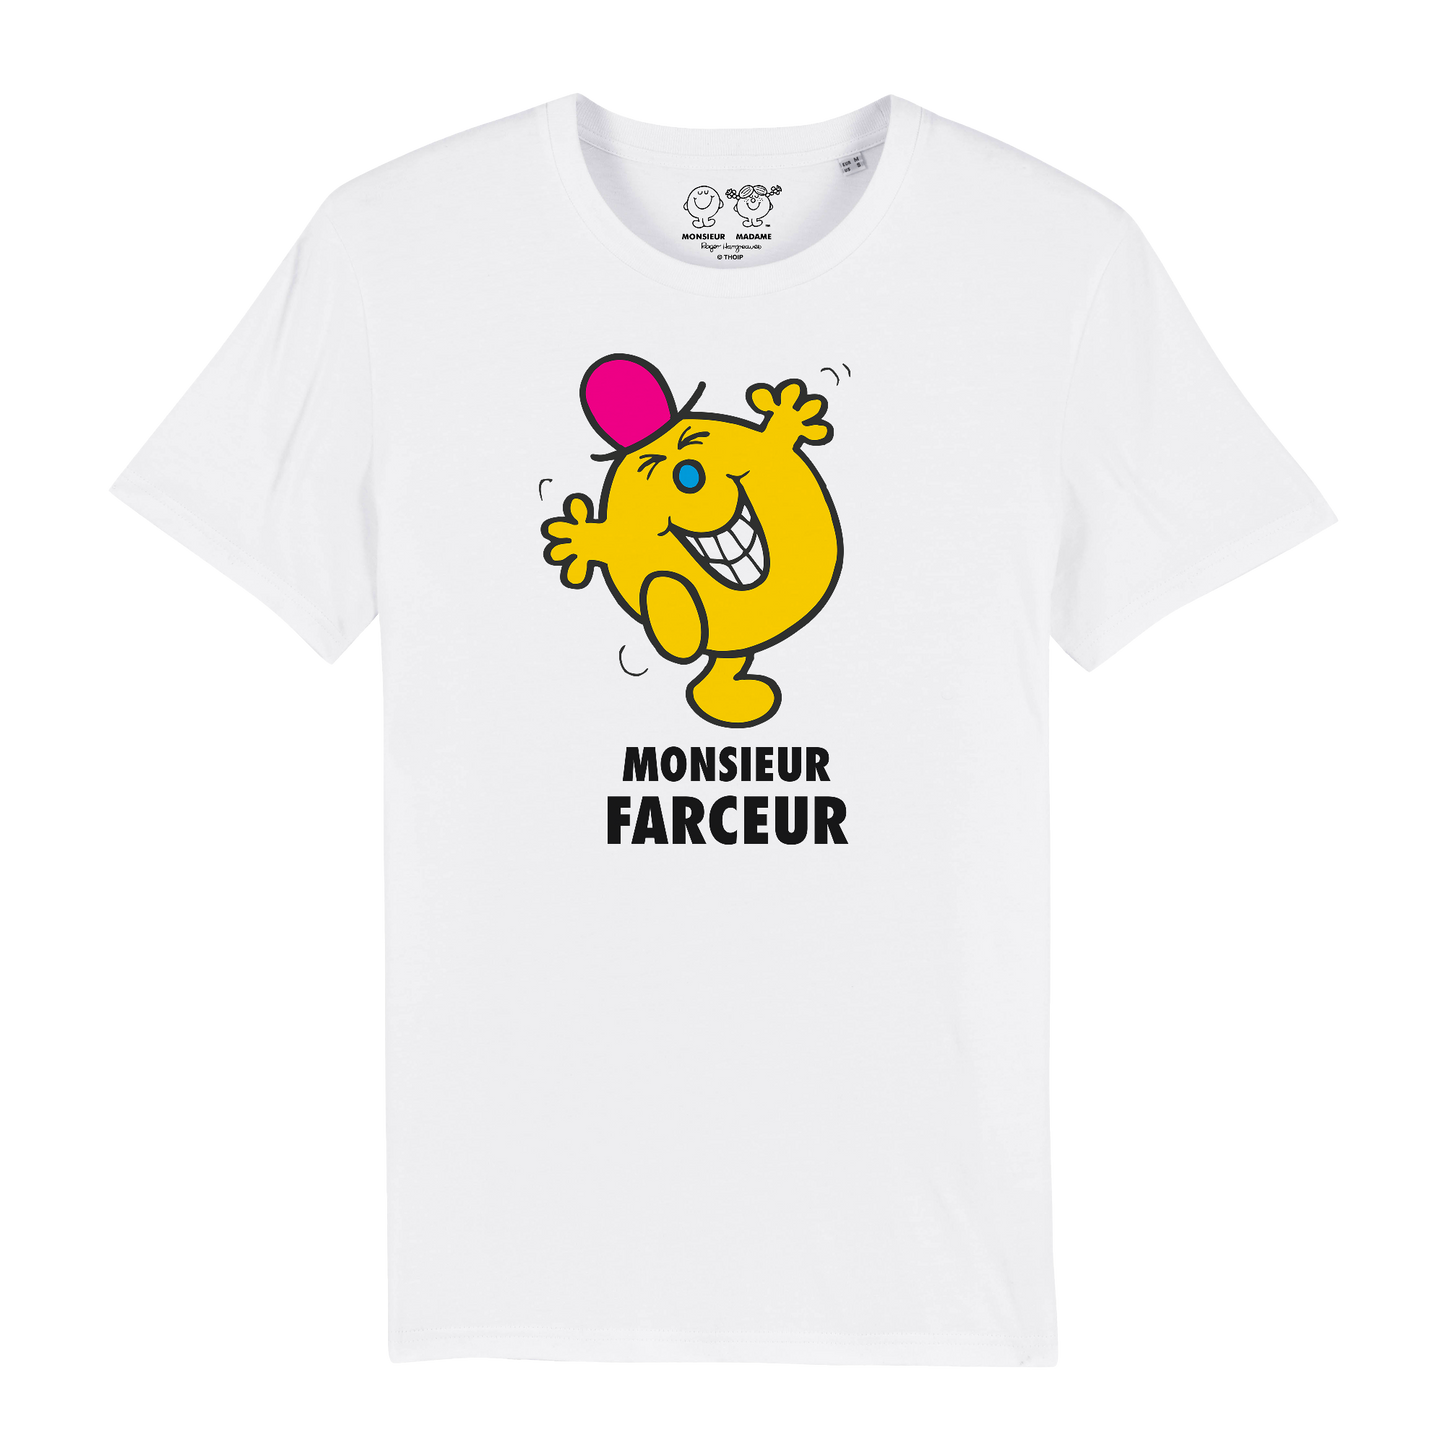 T-Shirt Homme Monsieur Farceur Monsieur Madame